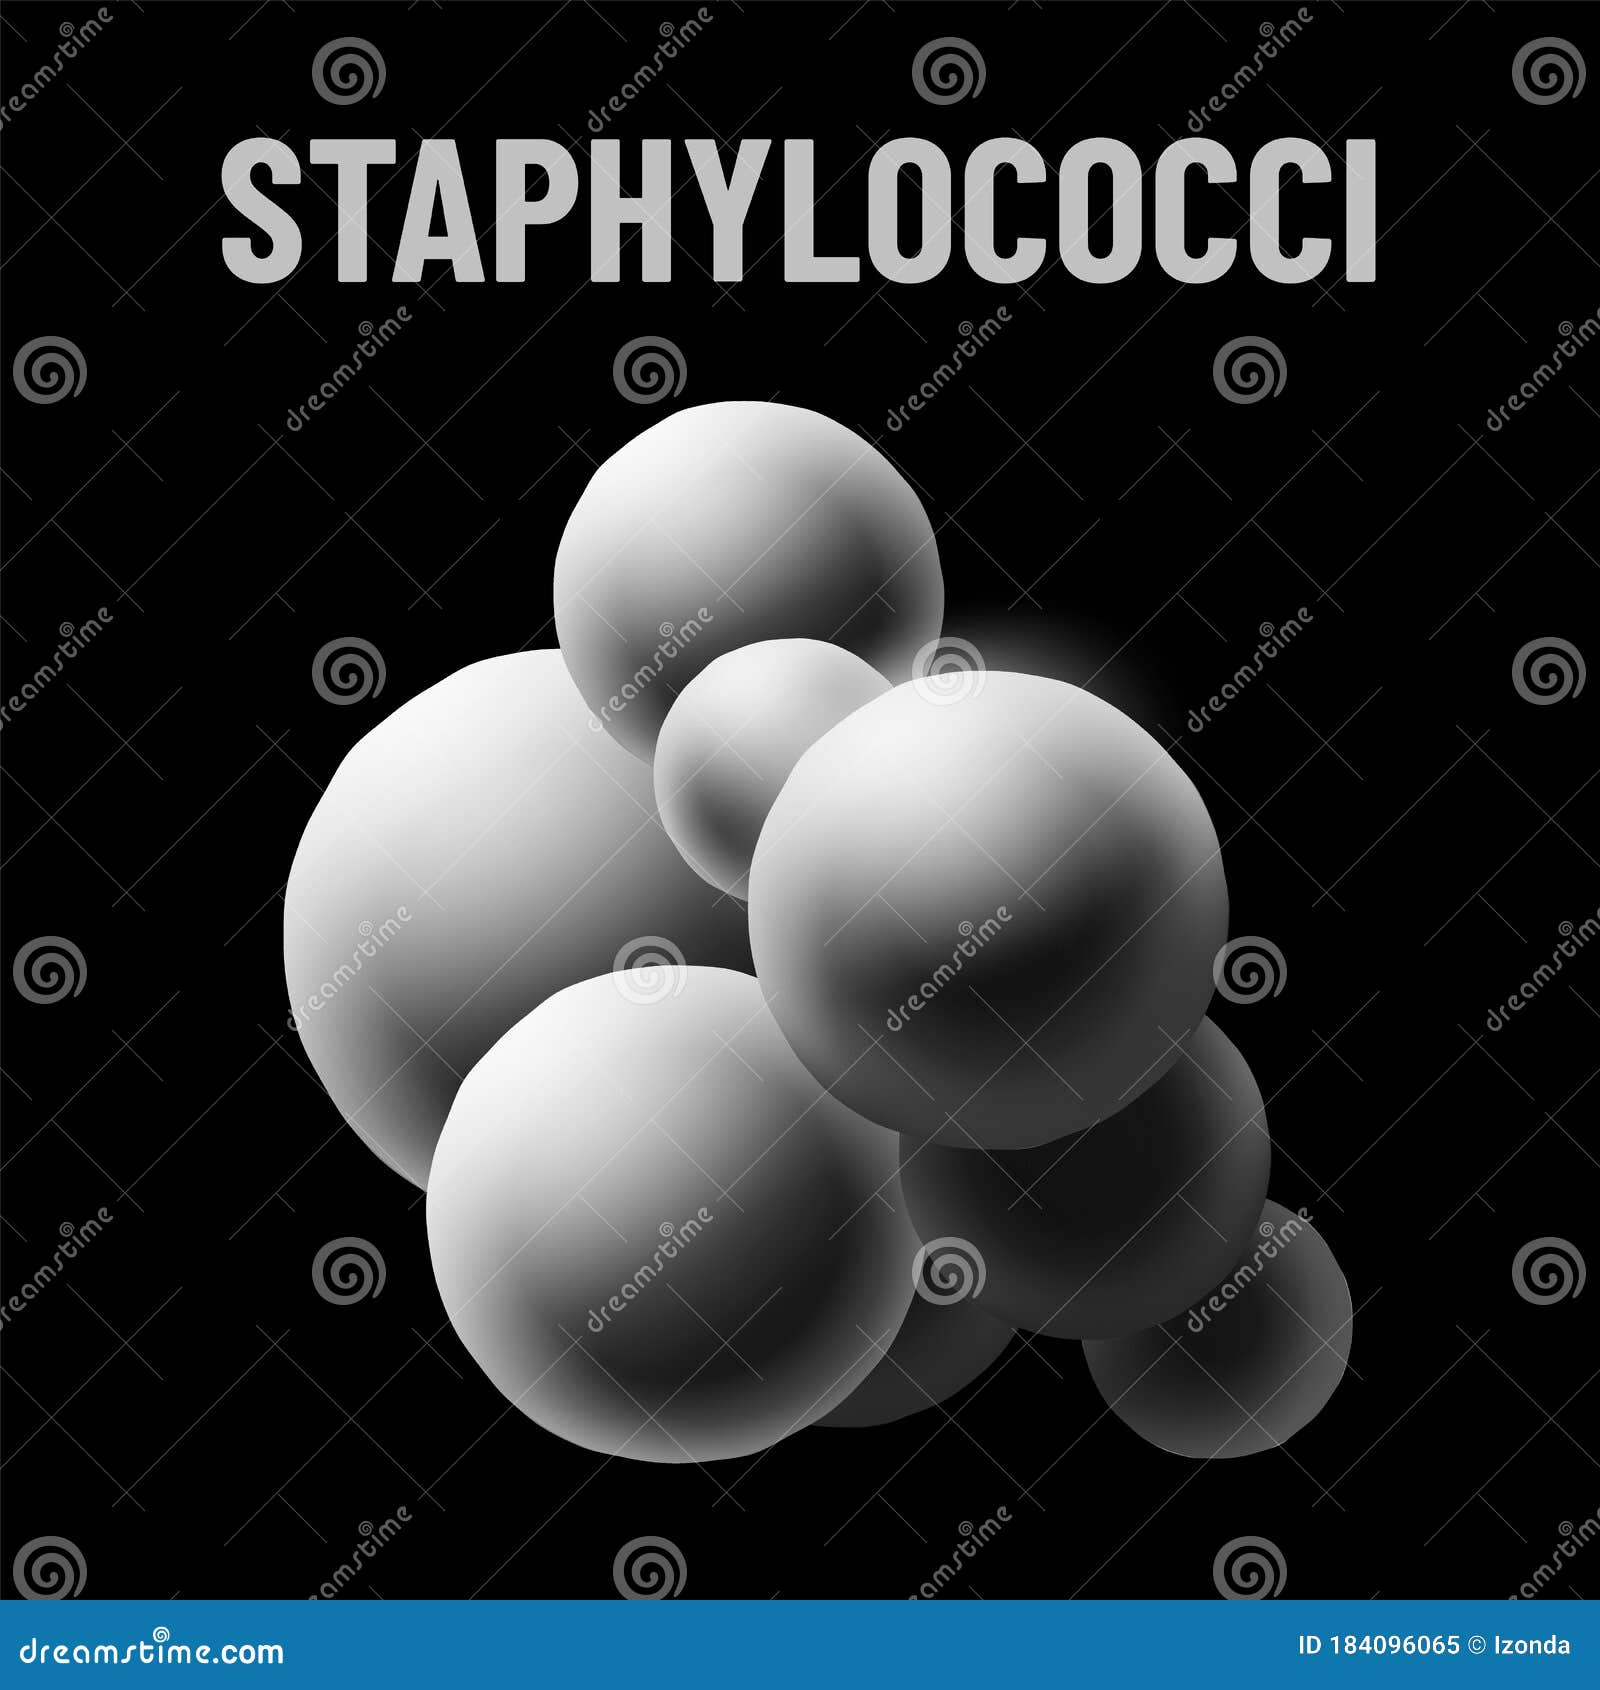 staphylococci bacteria monochrome   on black background. virus concept